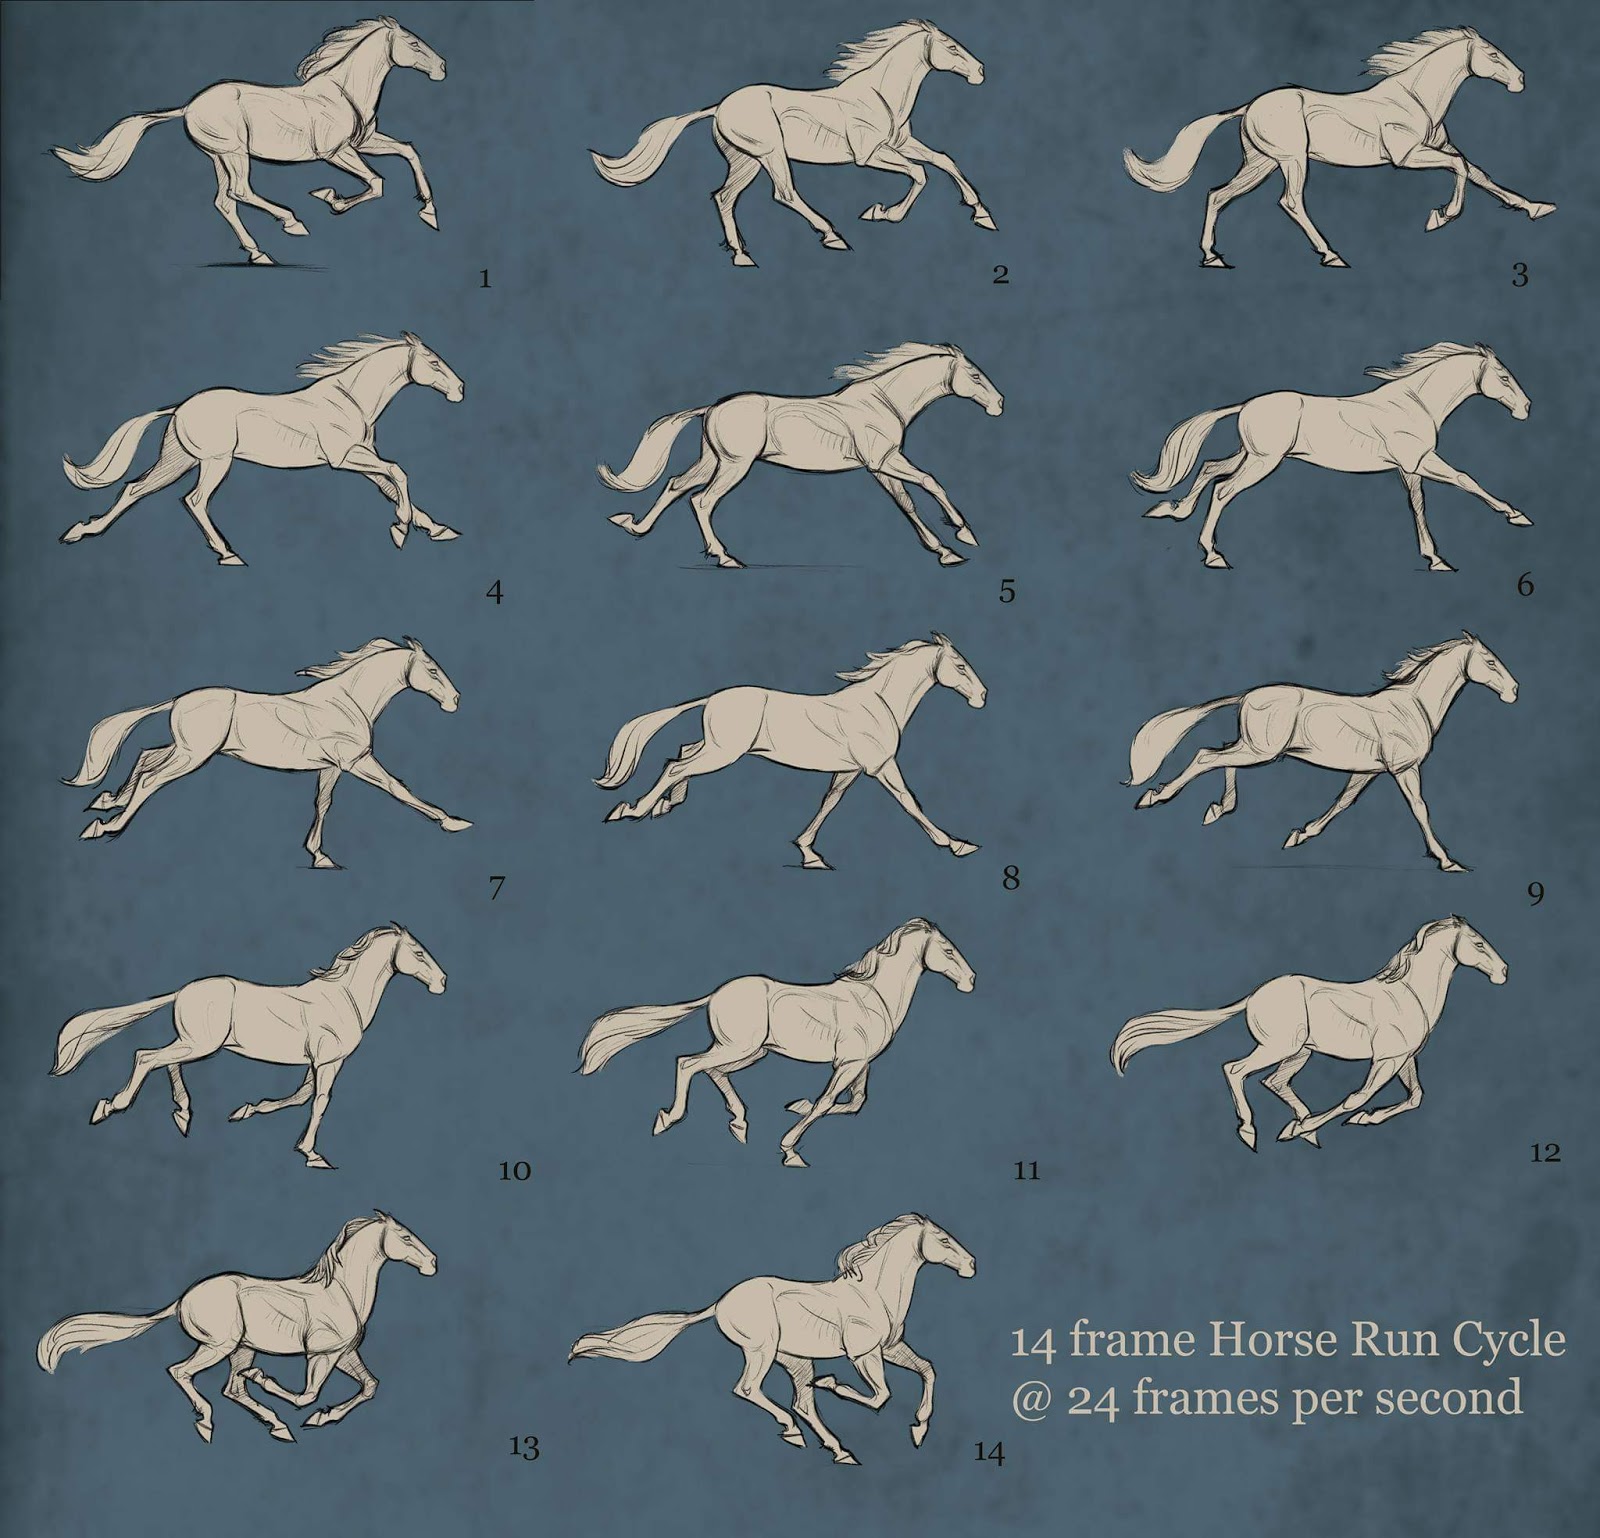 Animopus: Aaron Blaise: Horse Run Cycle Breakdown1600 x 1538